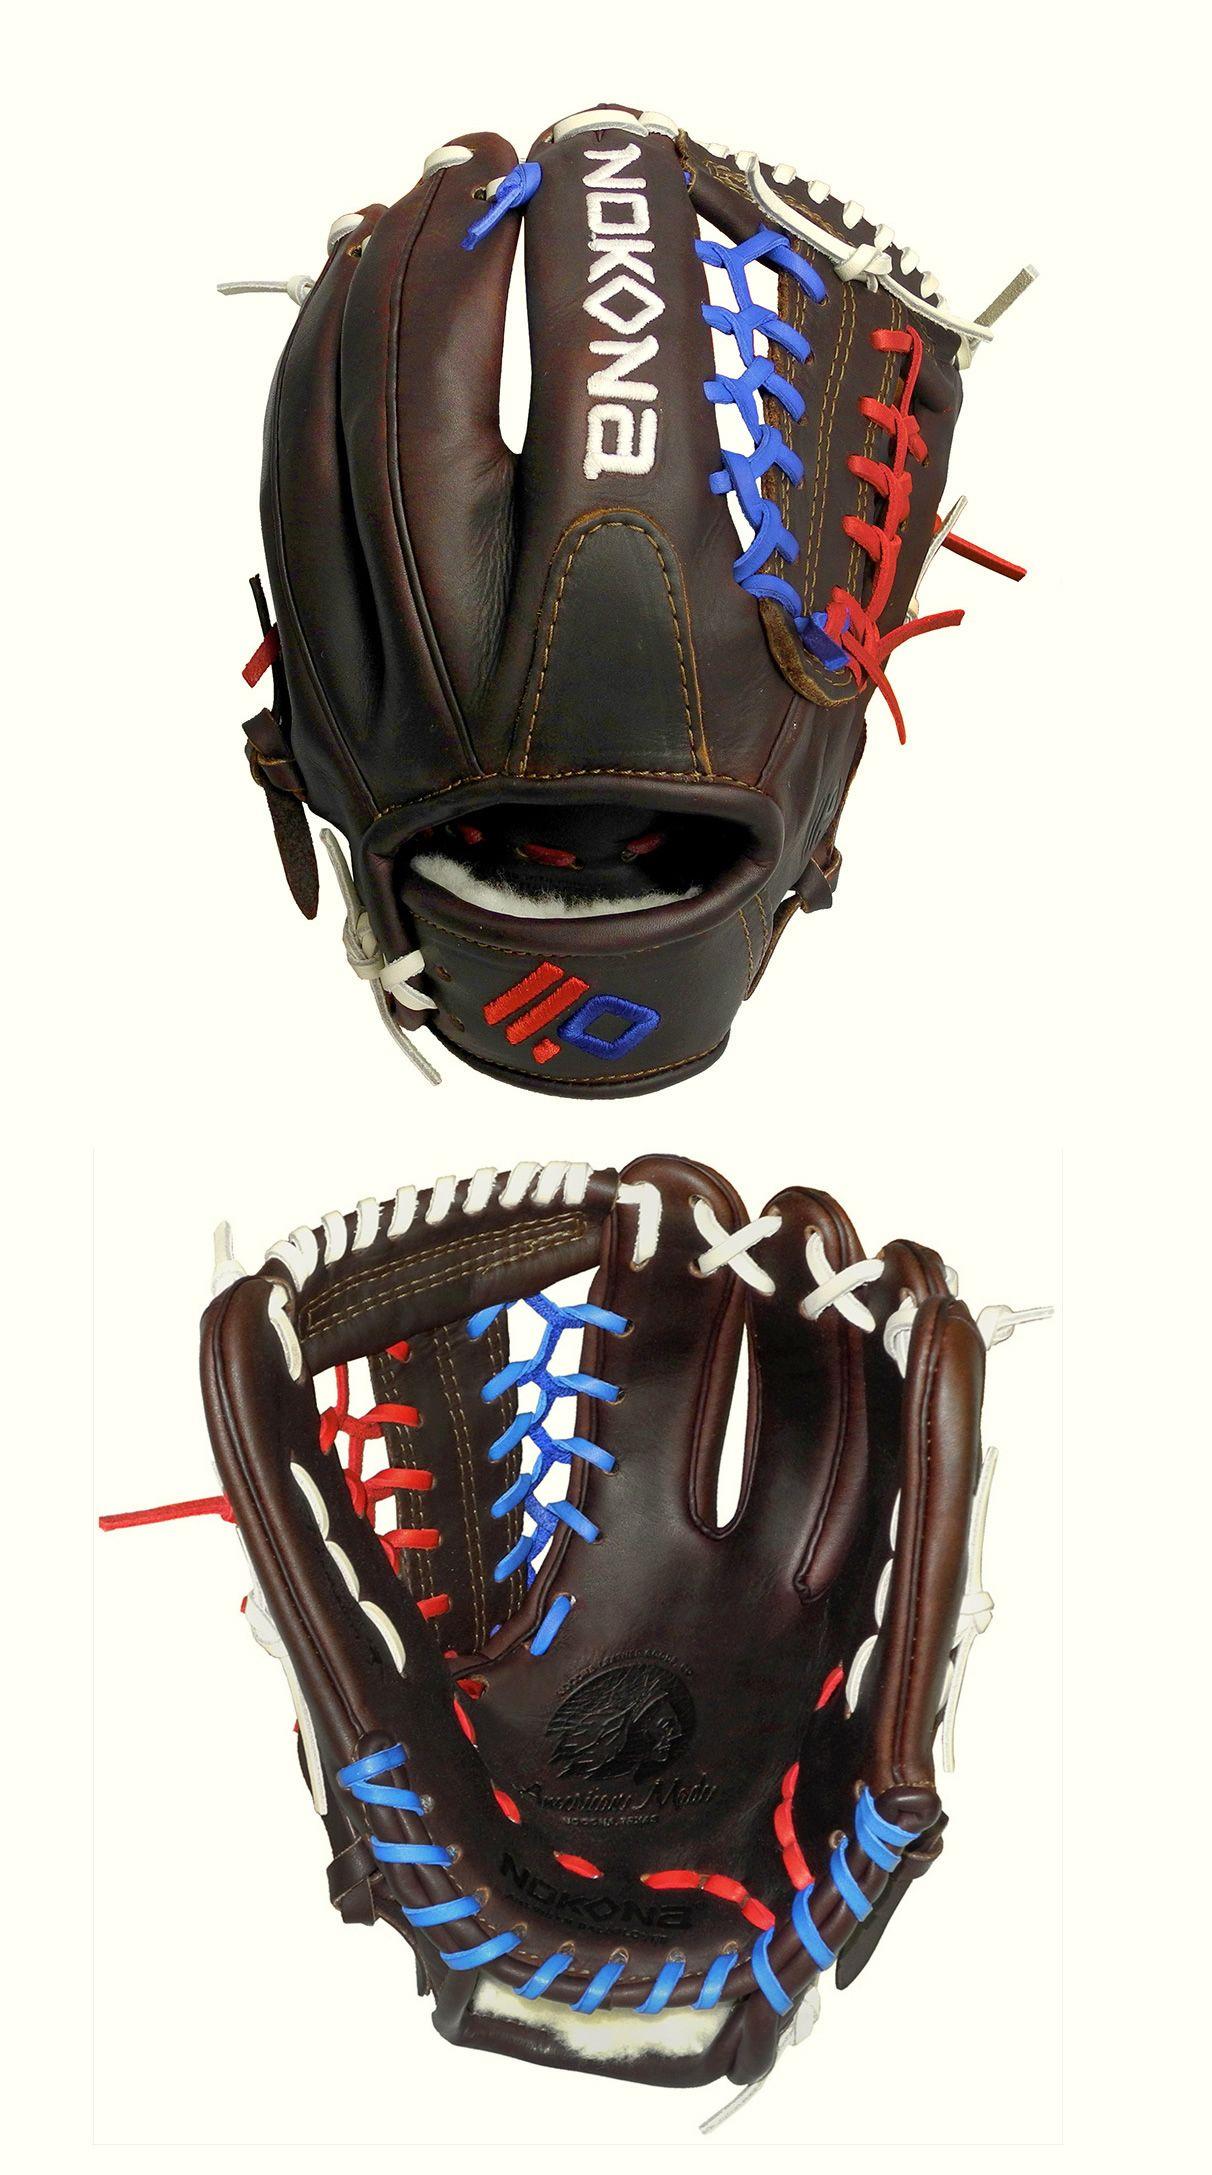 Baseball Glove Company Logo - Rebranding Case Study > Nokona American Ball Gloves by Onefastbuffalo